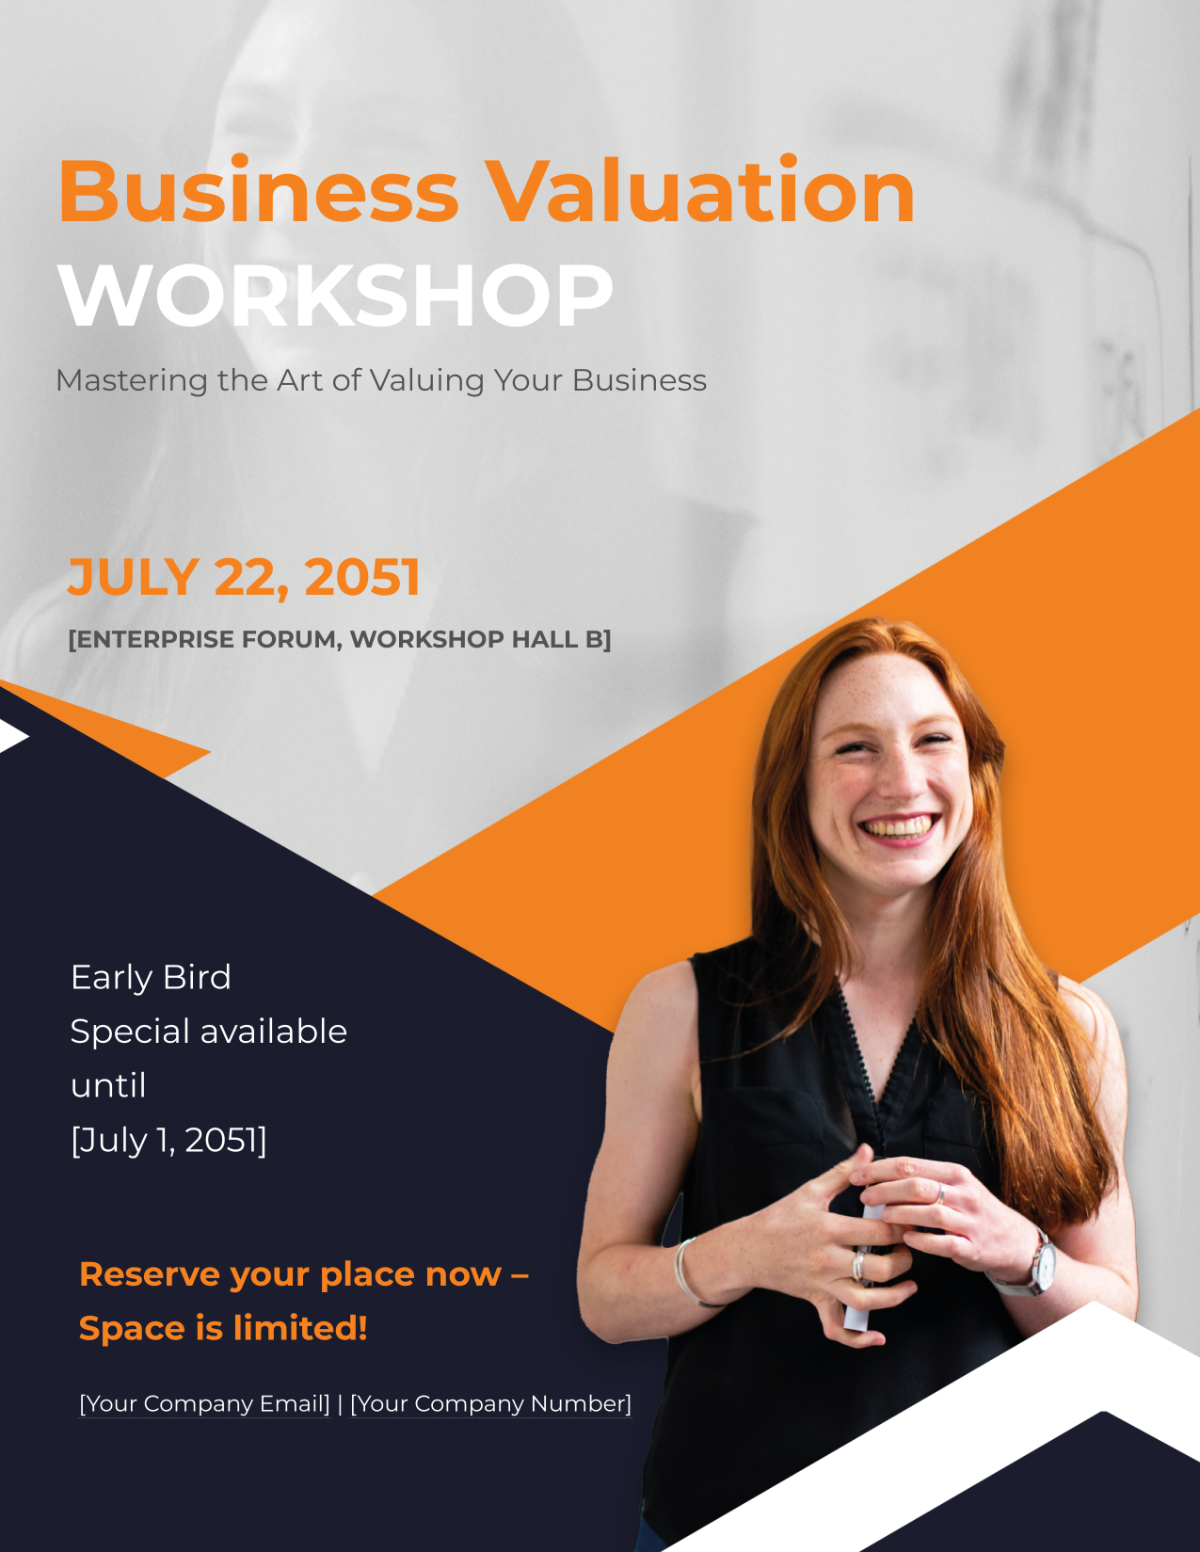 Business Valuation Workshop Flyer Template